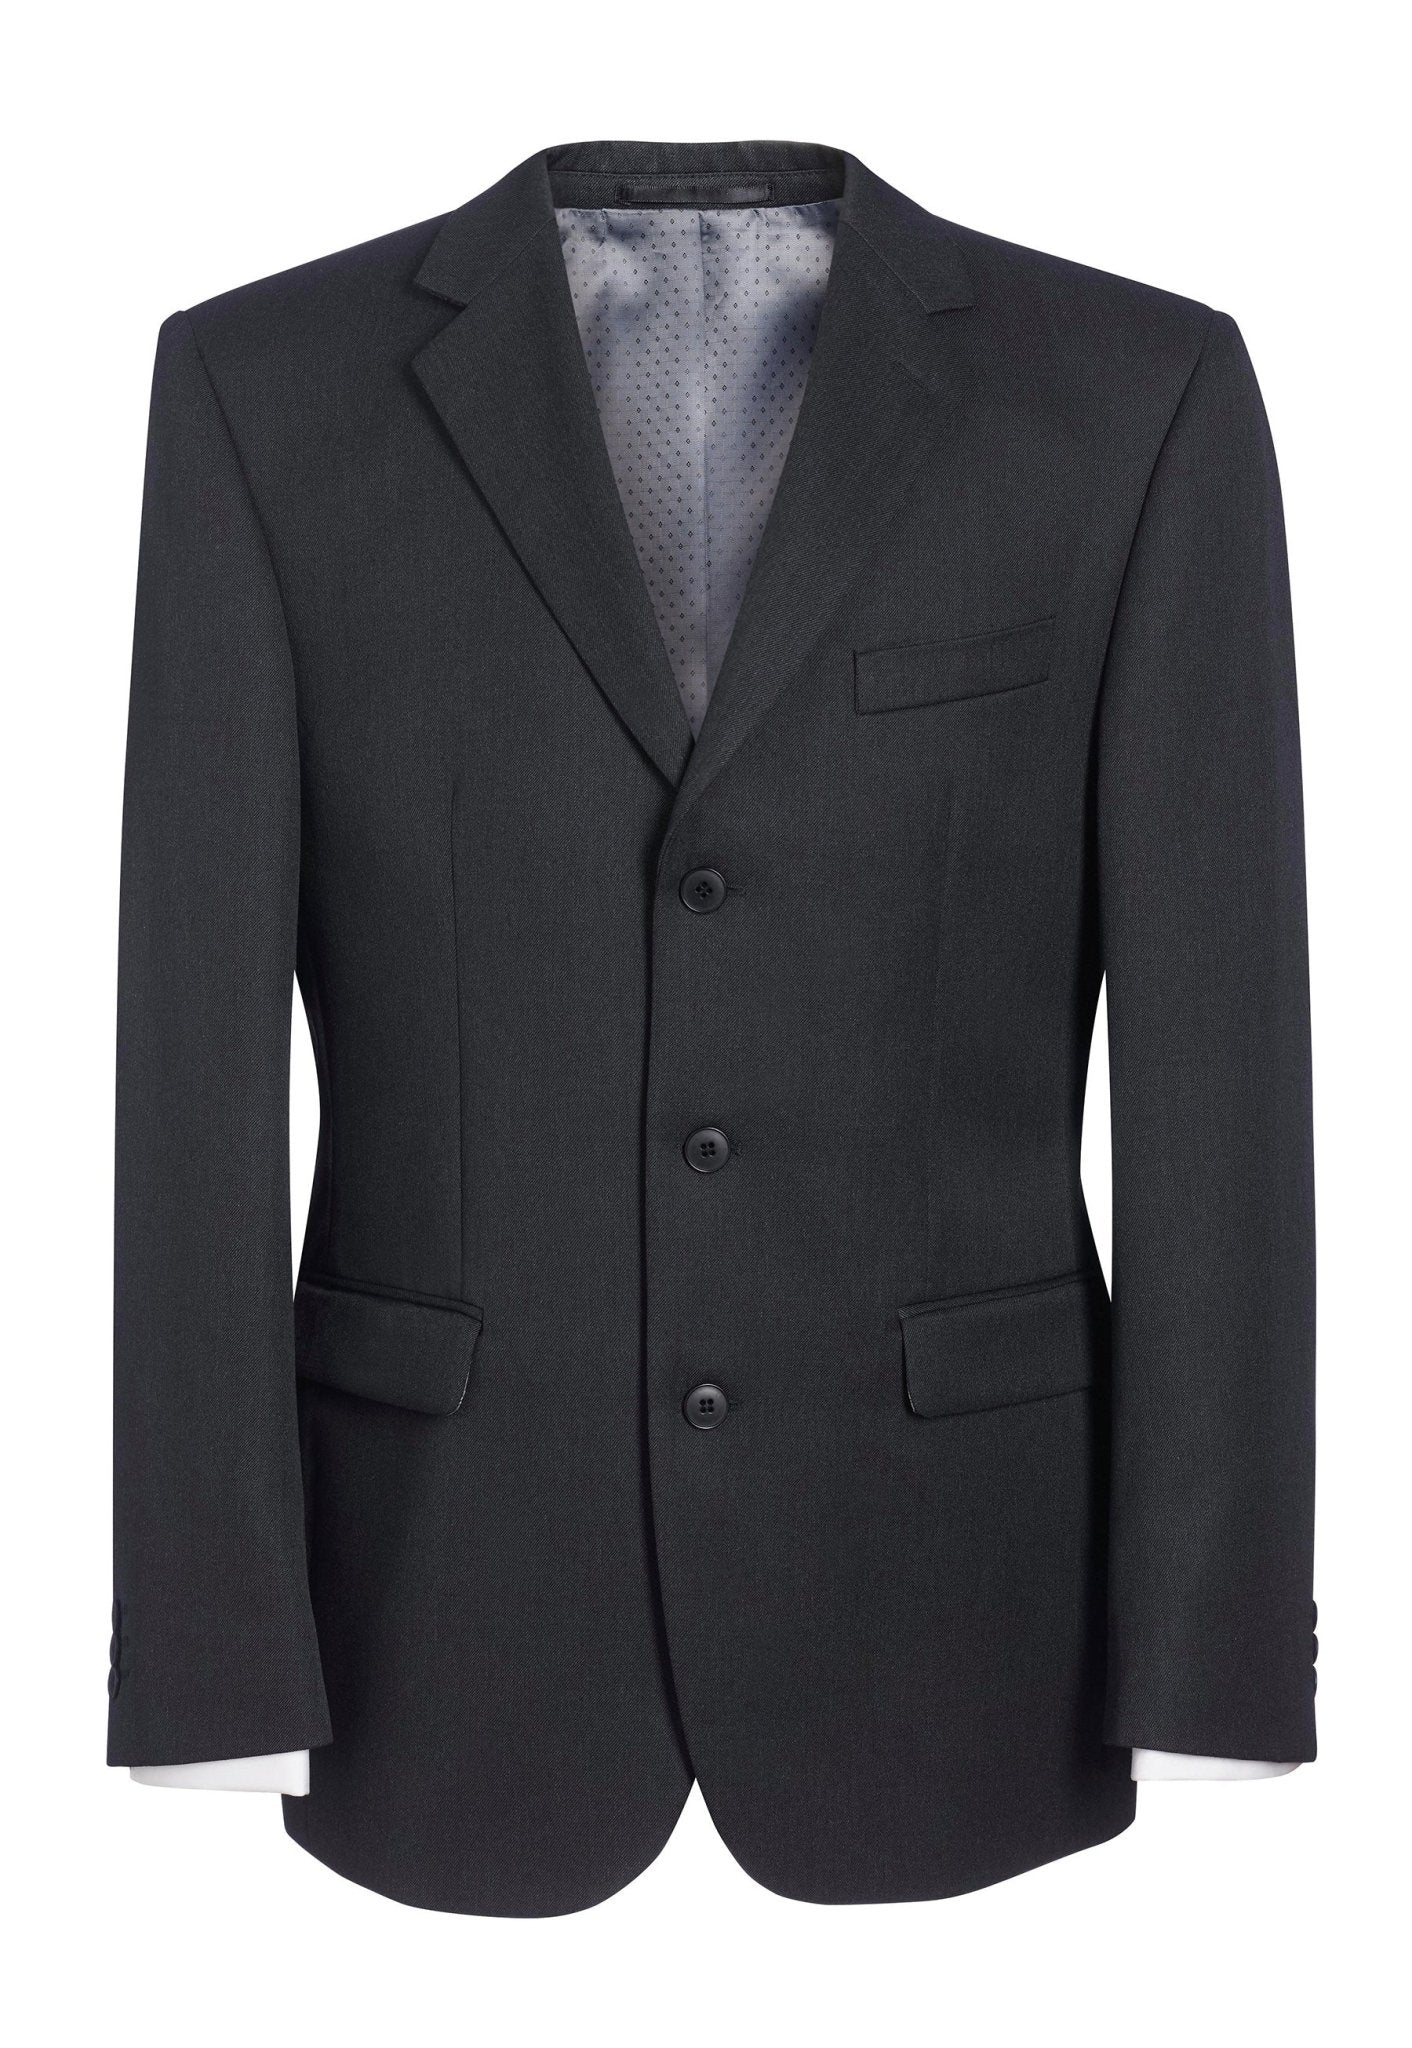 Brook Taverner Alpha Classic Fit Jacket - The Work Uniform Company